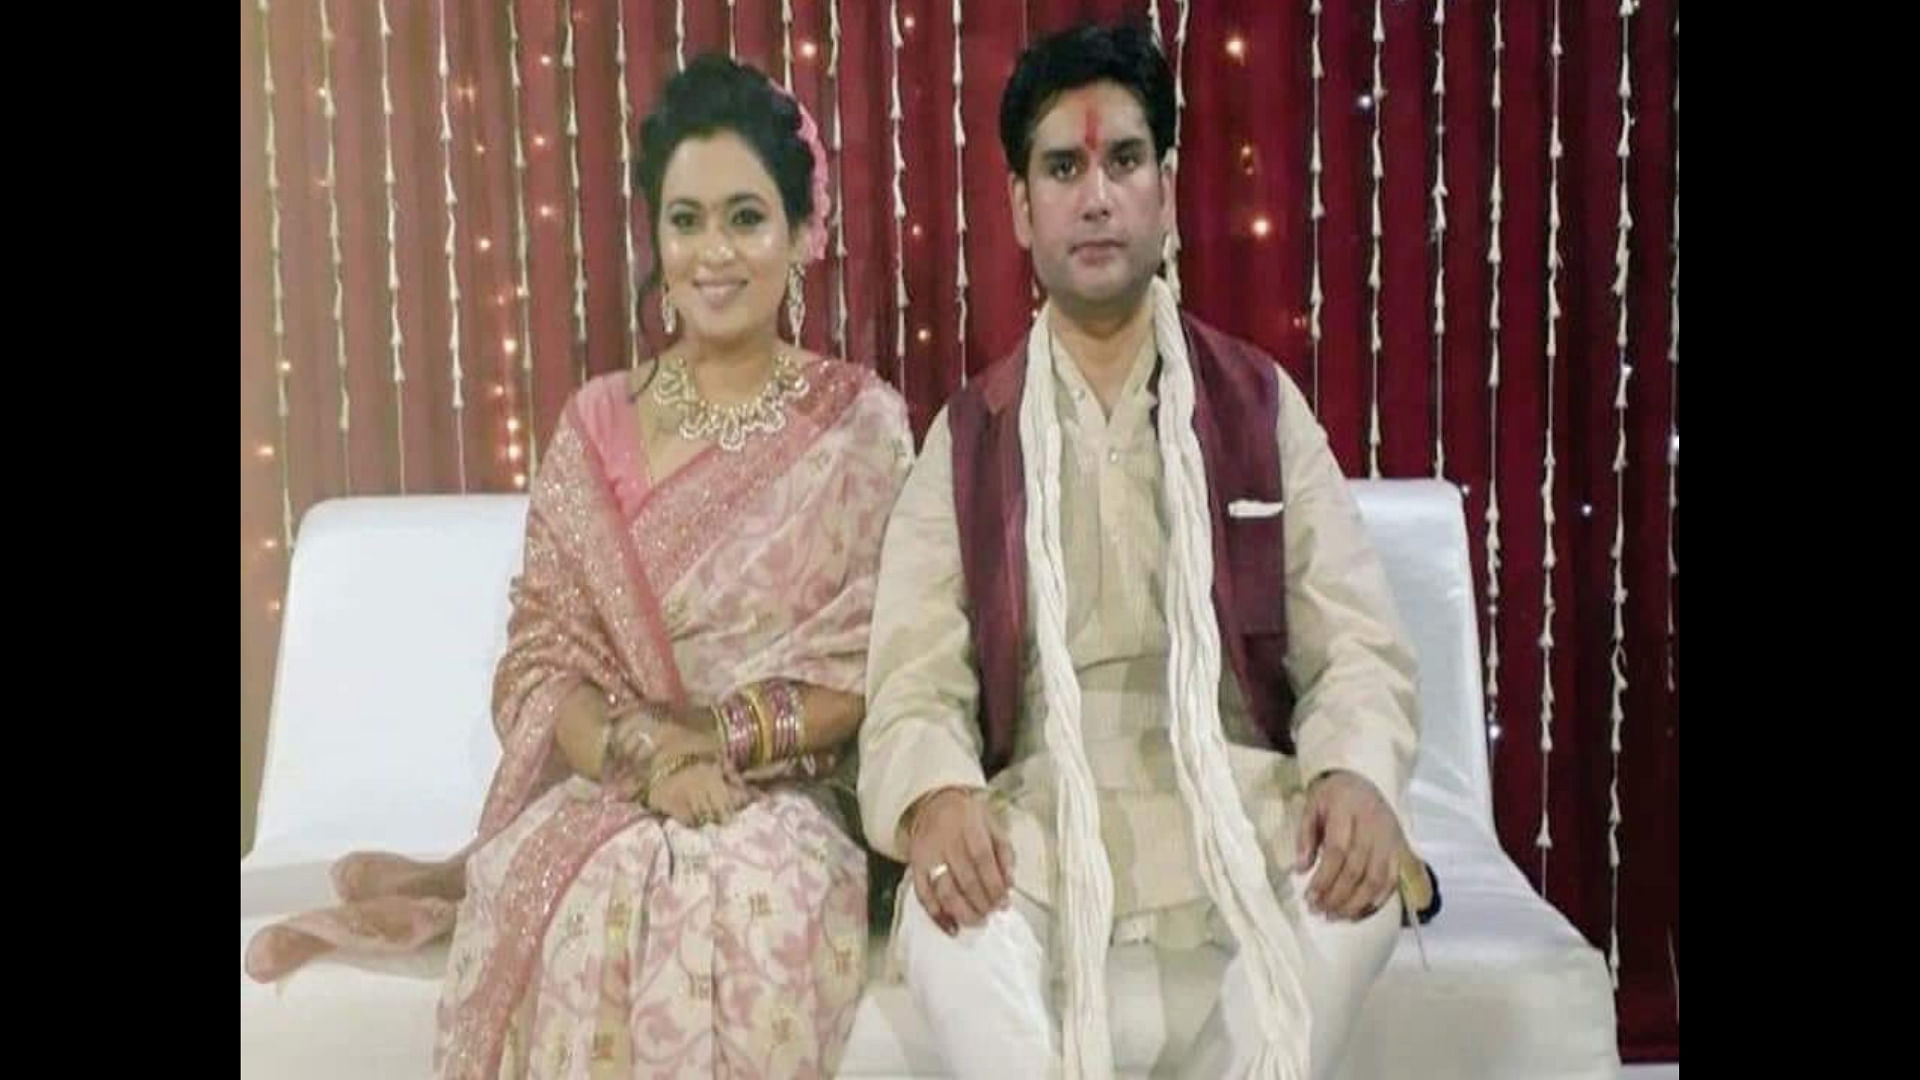 Rohit Shekhar Tiwari and his wife Apoorva Shukla.